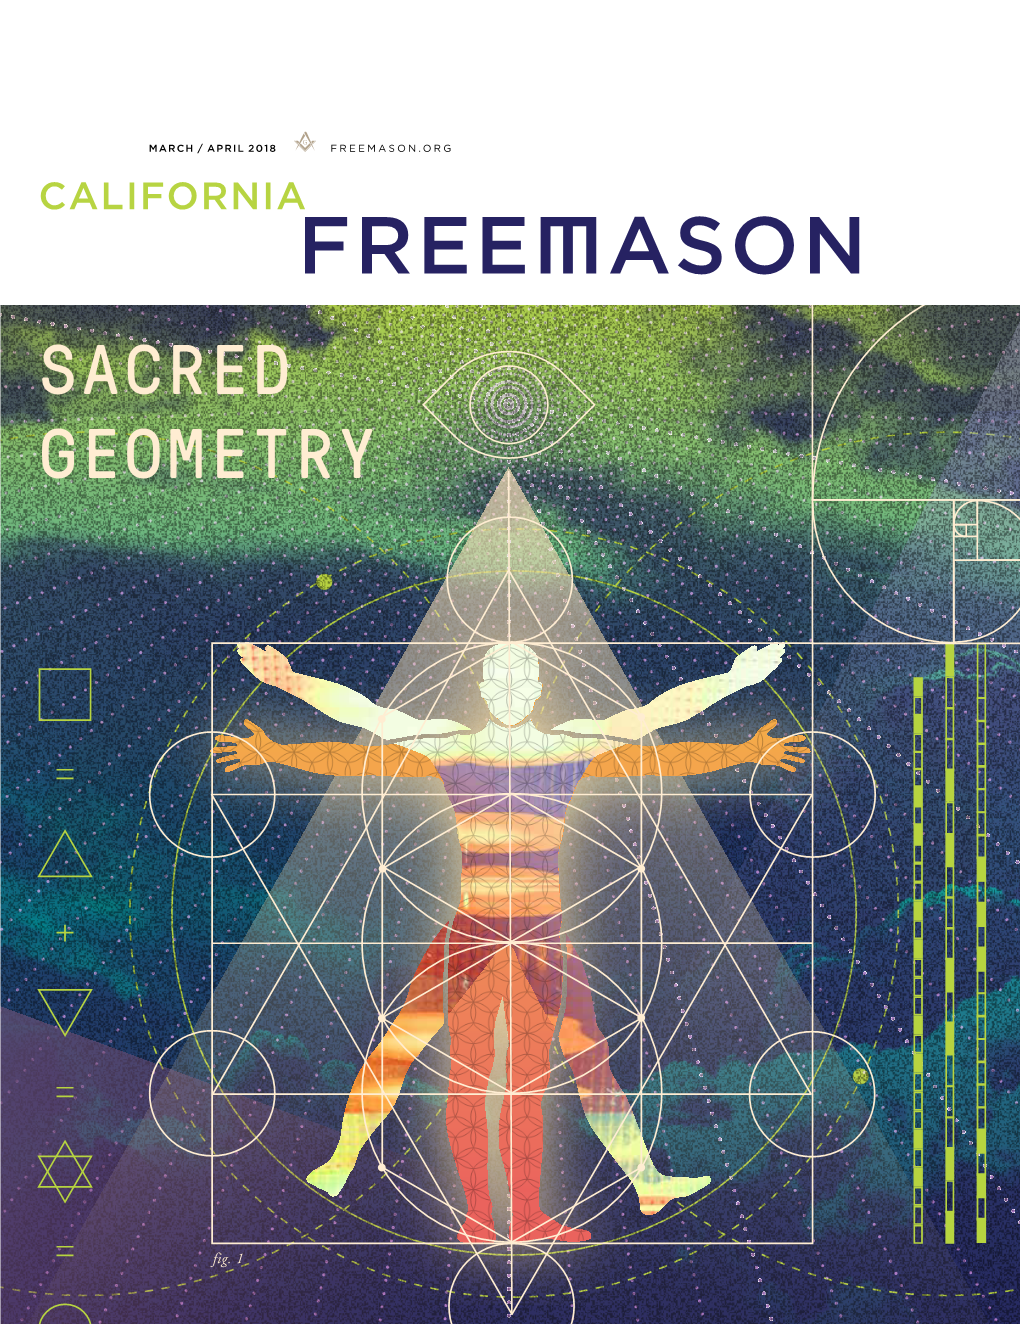 Sacred Geometry